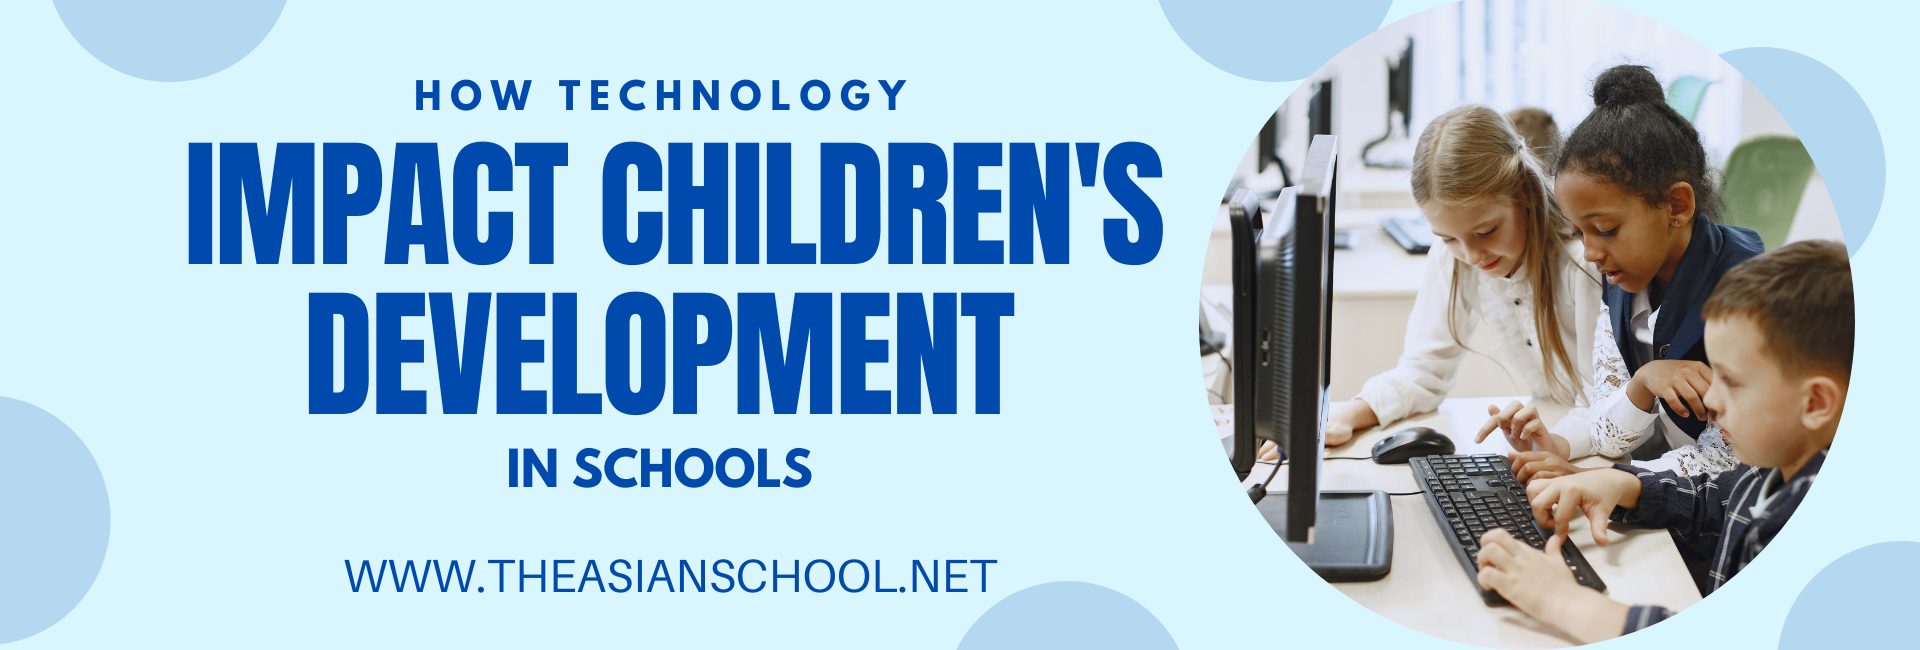 How Technology Impact Children's Development in Schools